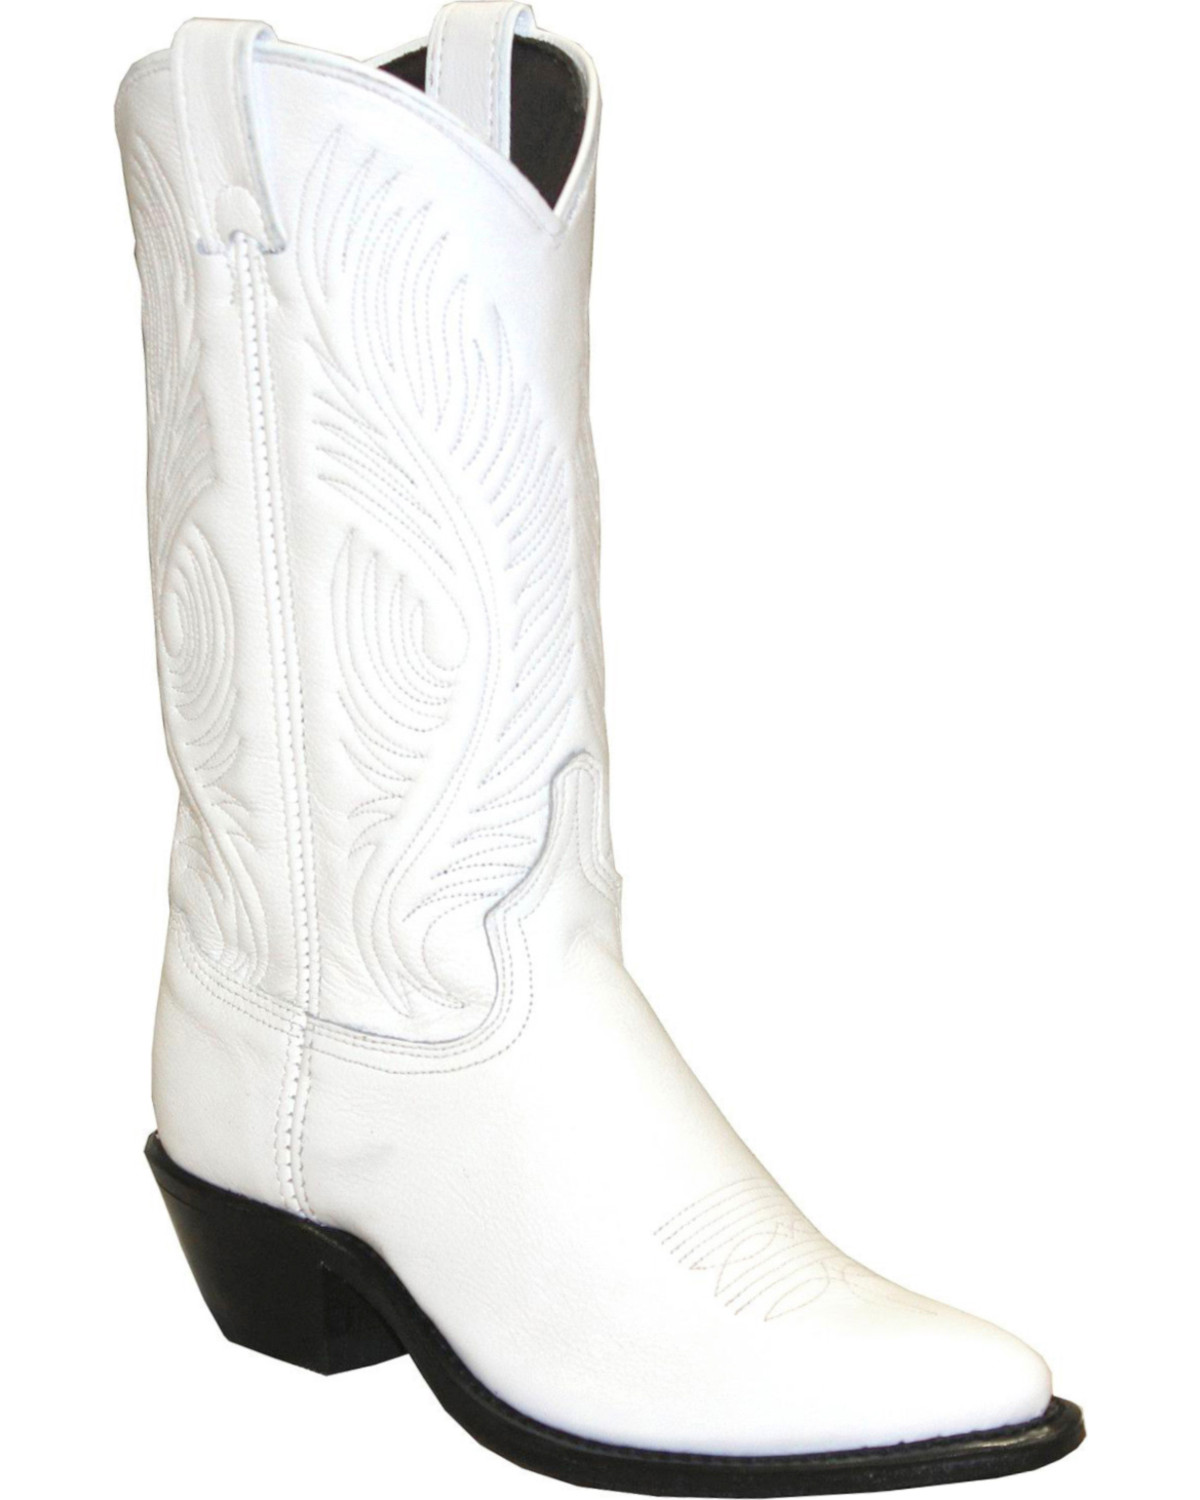 white western boots uk